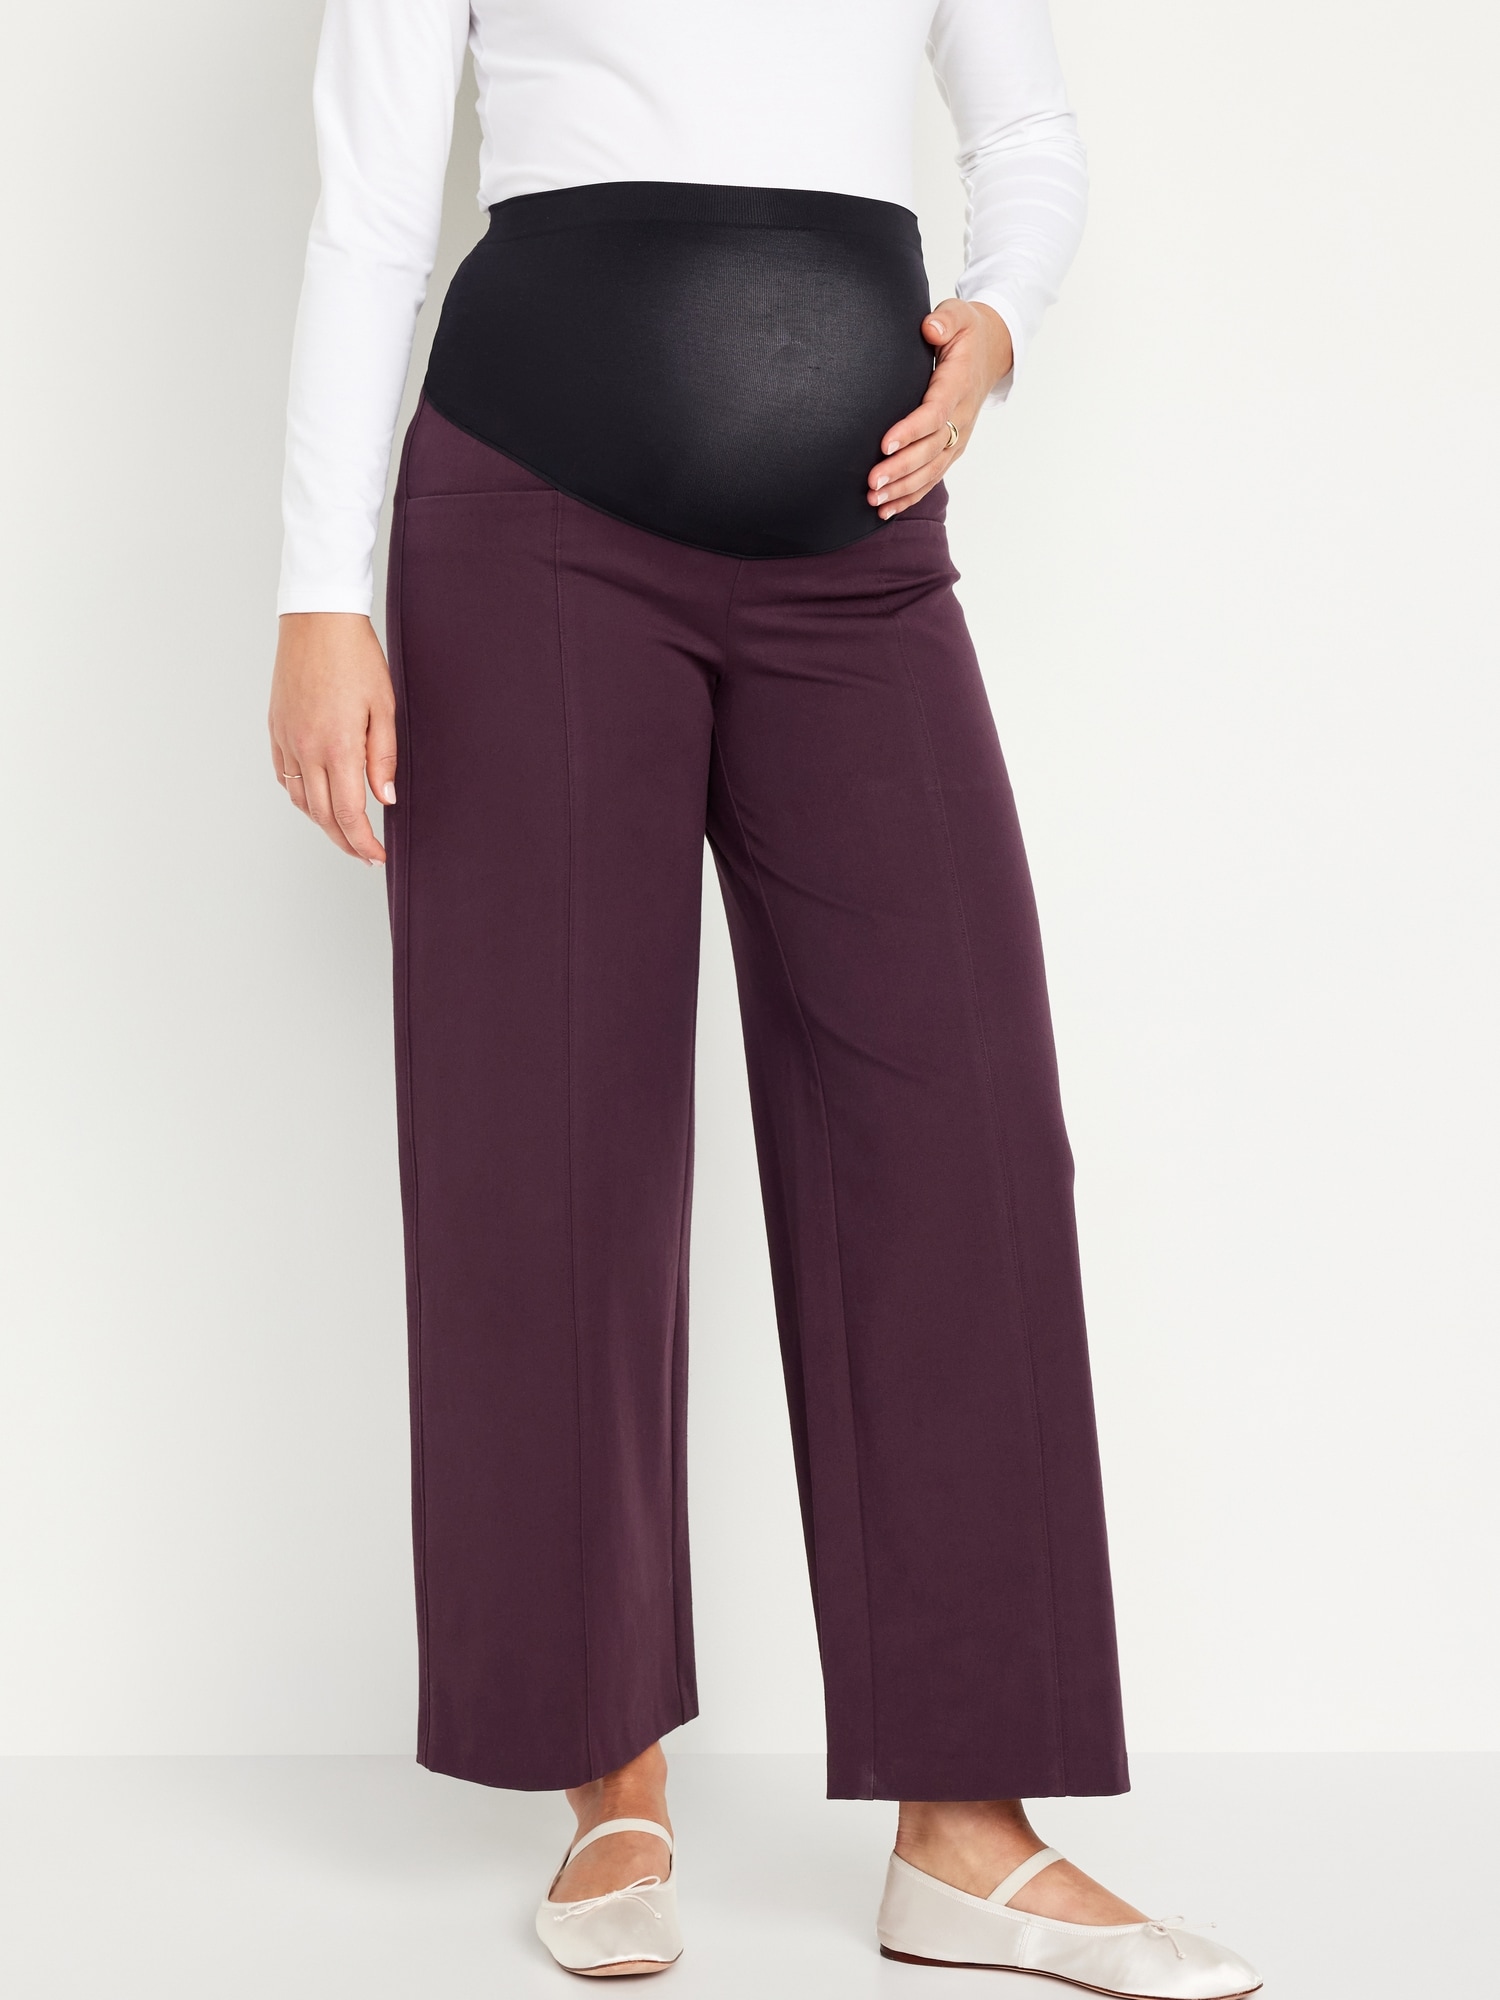 Long Inseam Maternity Pants